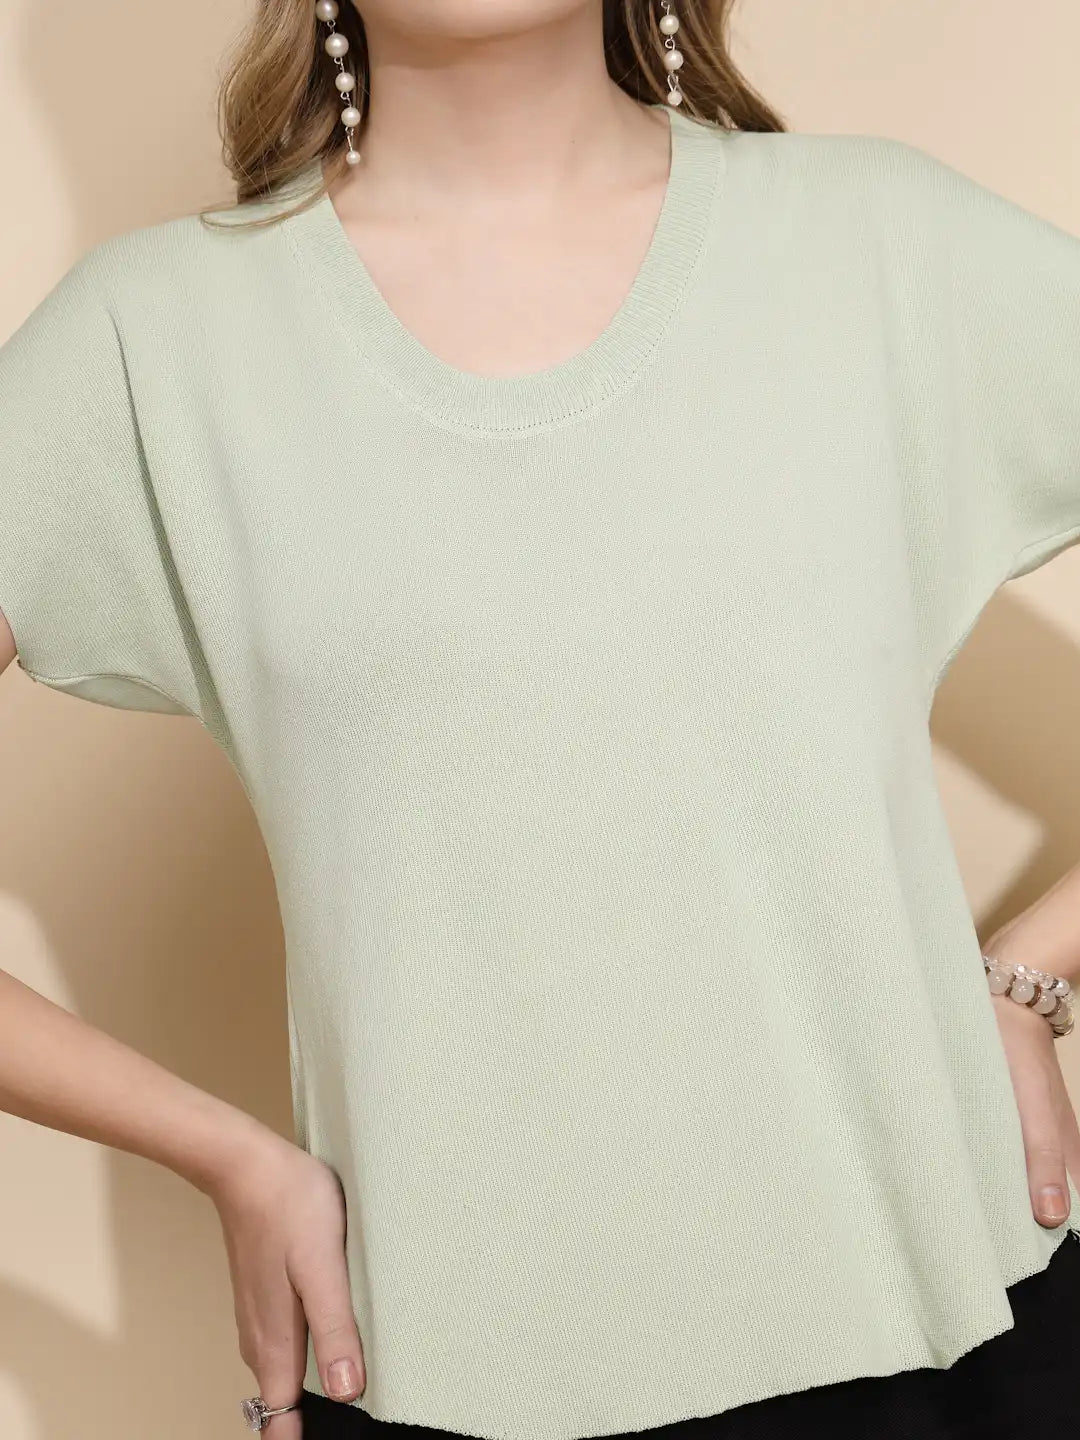 Sage Green Rayon Blend Regular Fit Top For Women